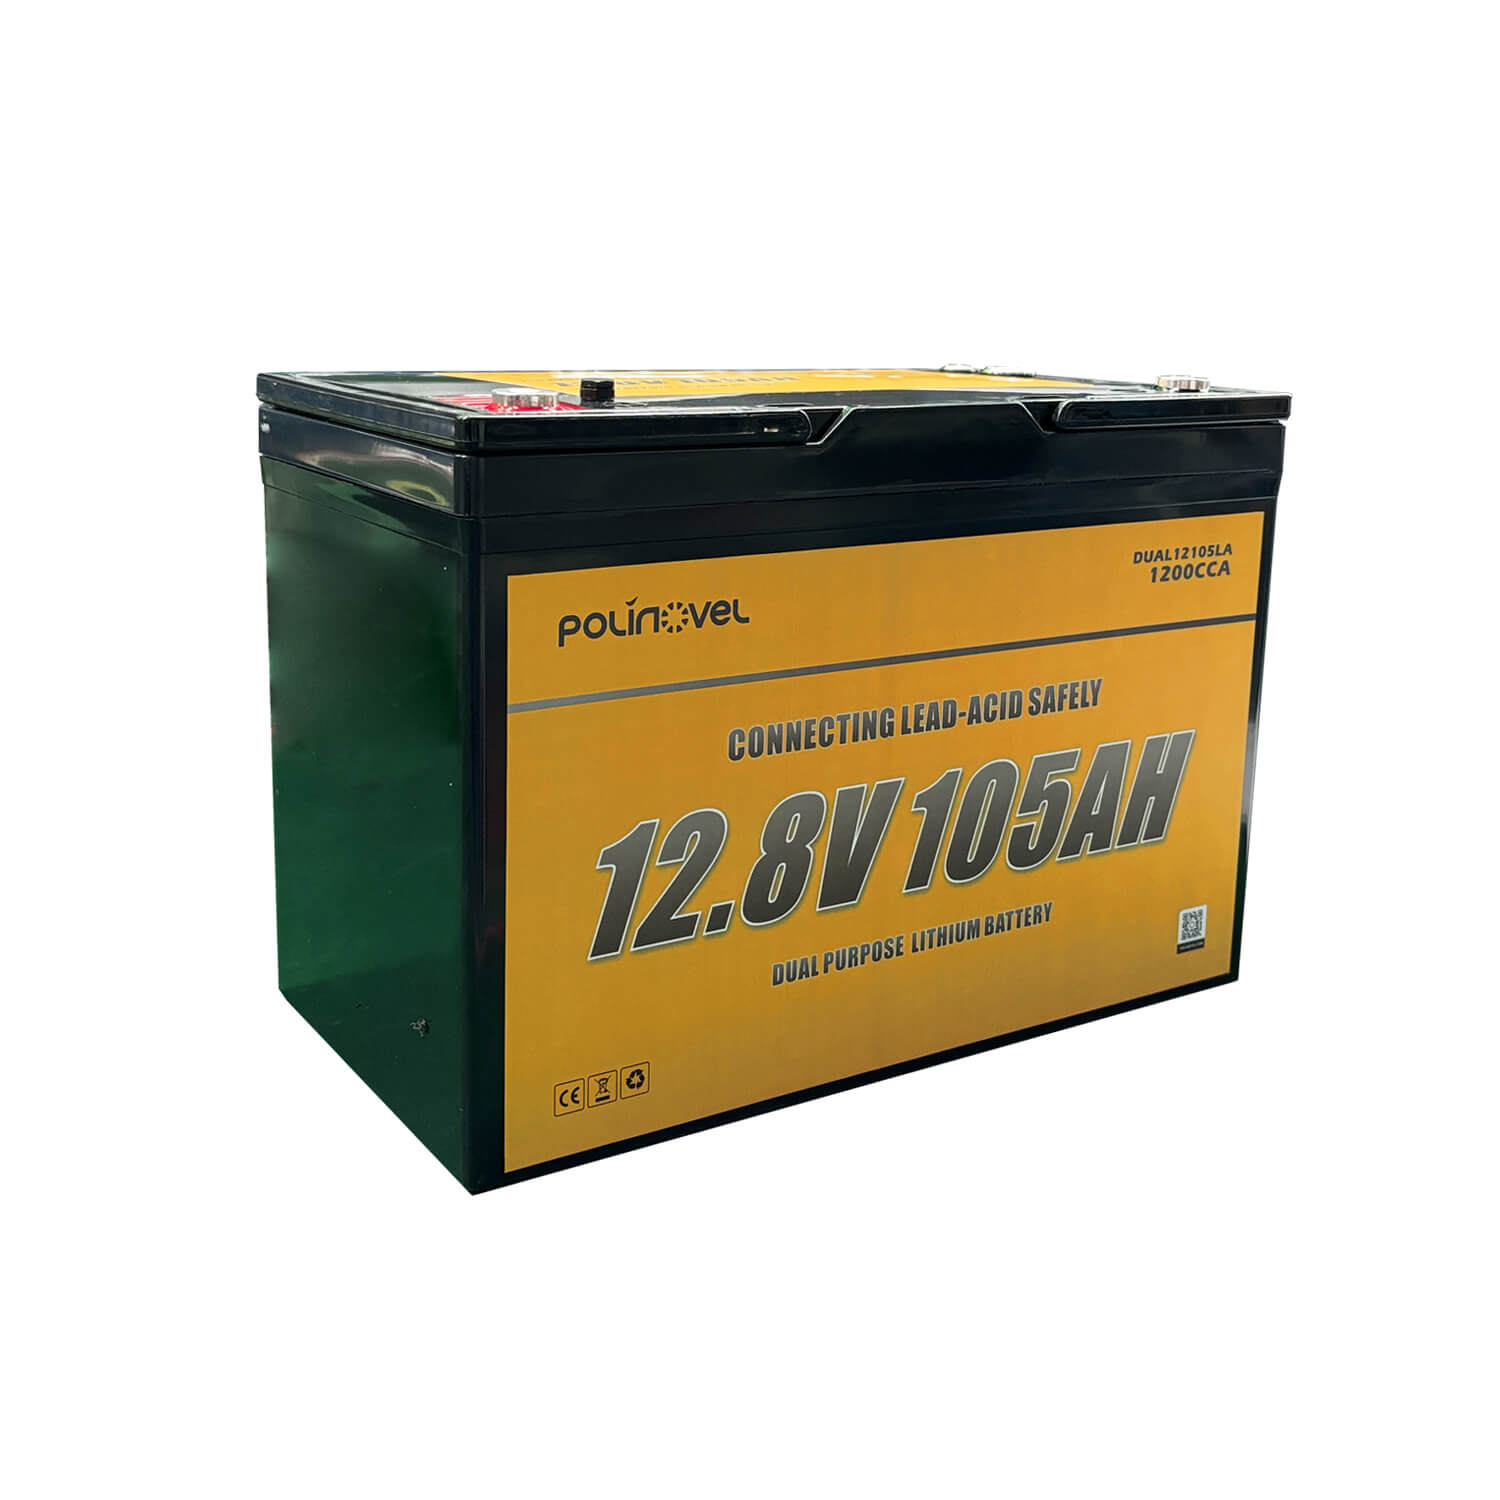 Polinovel 12V 105Ah Dual Purpose LiFePO4 Battery DUAL12105LA